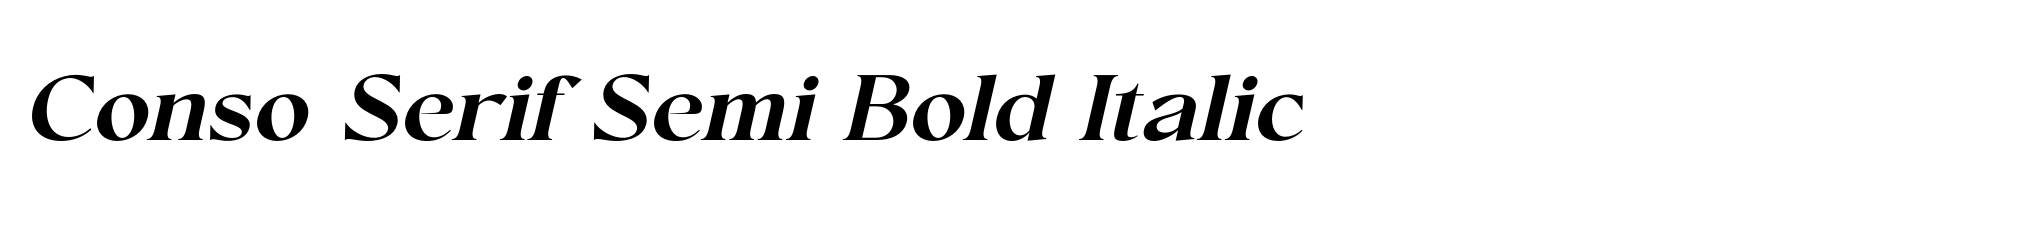 Conso Serif Semi Bold Italic image